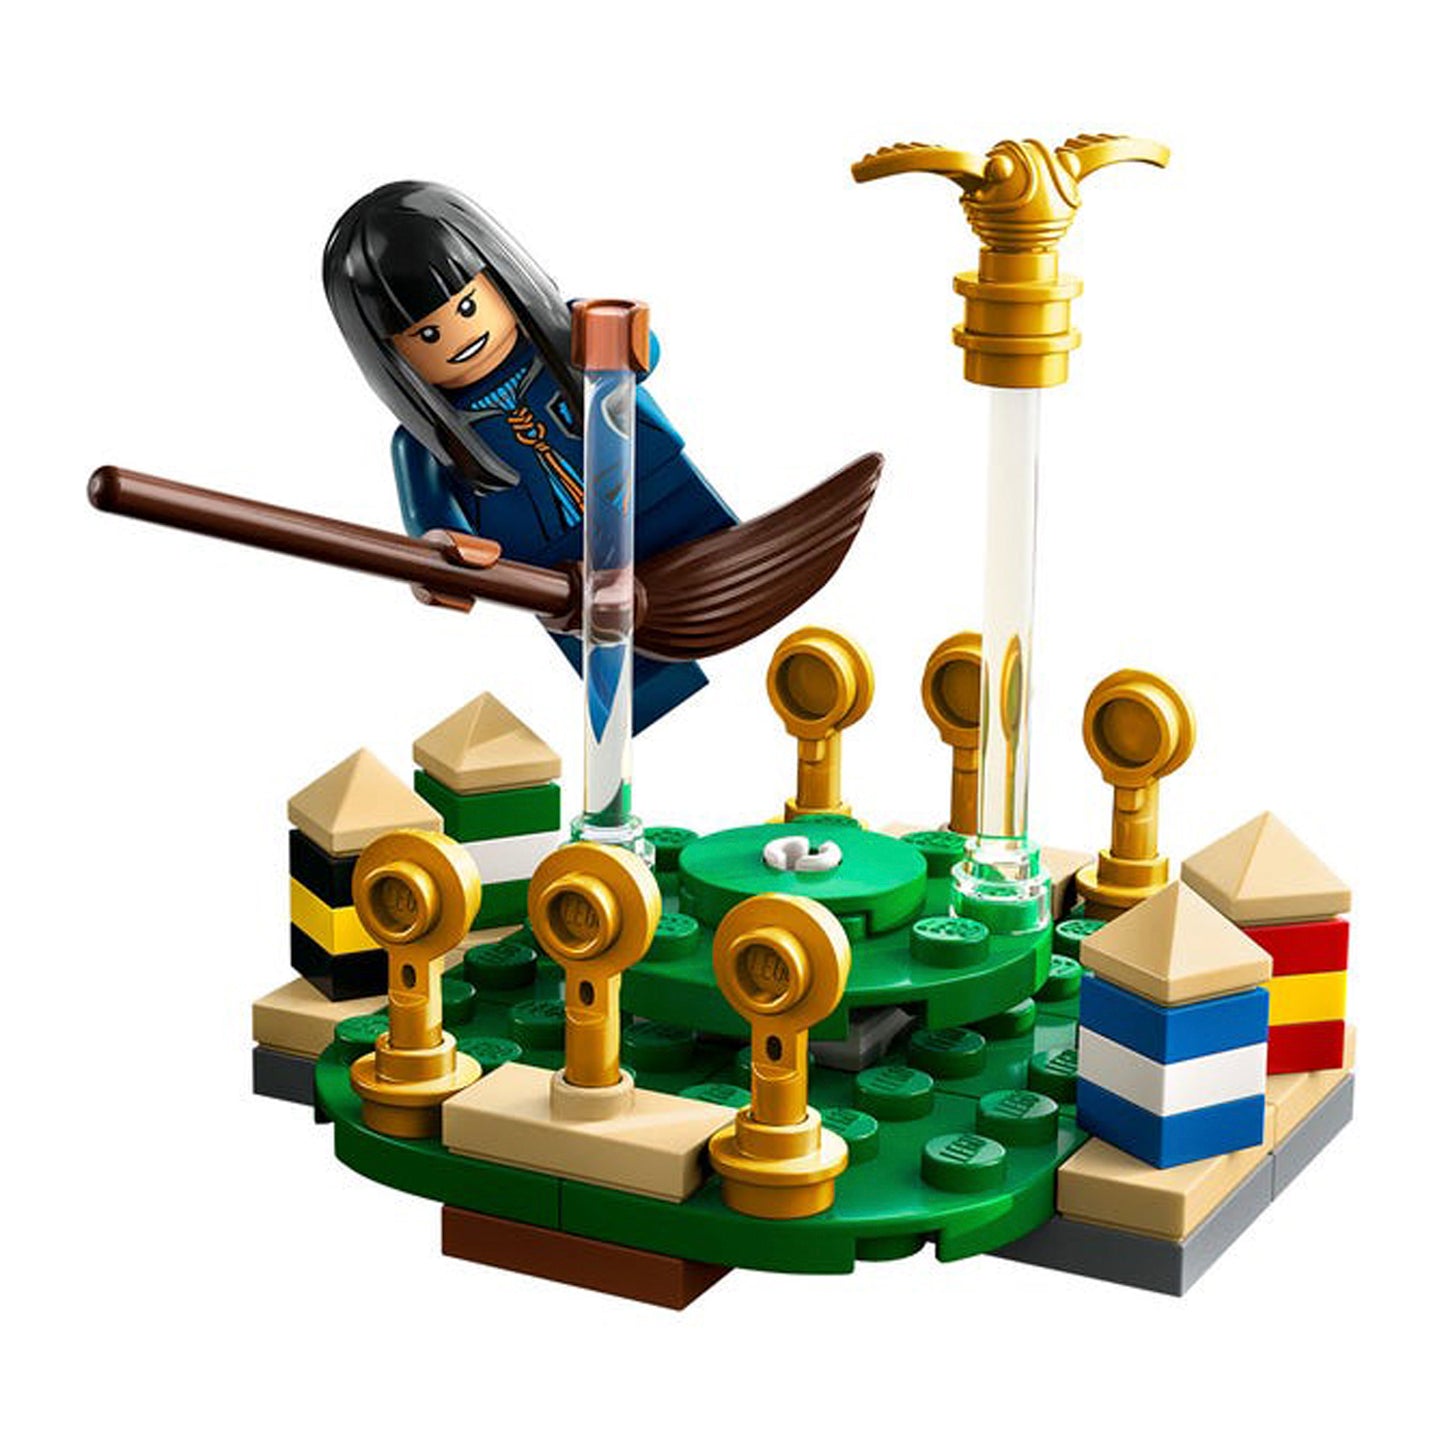 Lego Harry Potter Practica de Quidditch 30651 - Crazygames